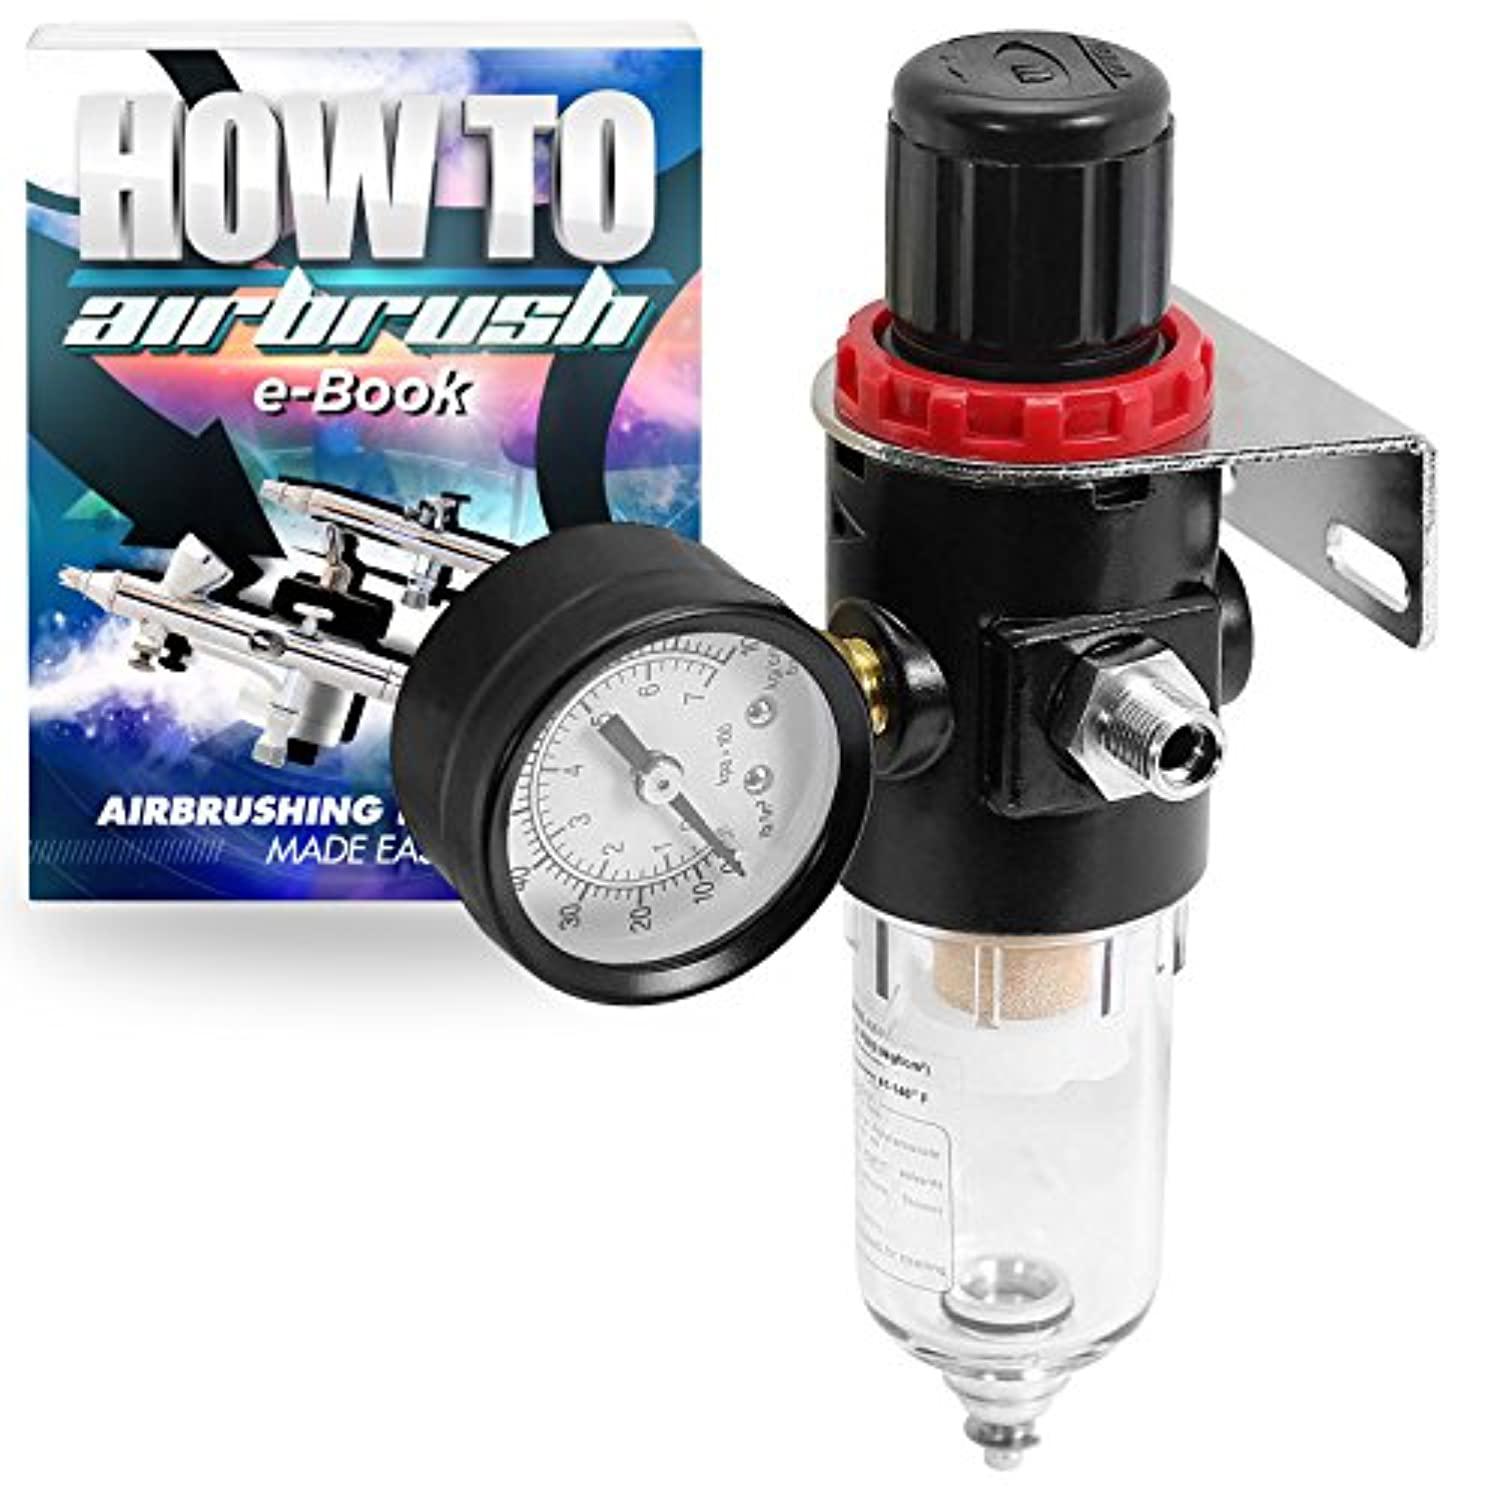 pointzero airbrush air compressor regulator with water-trap filter